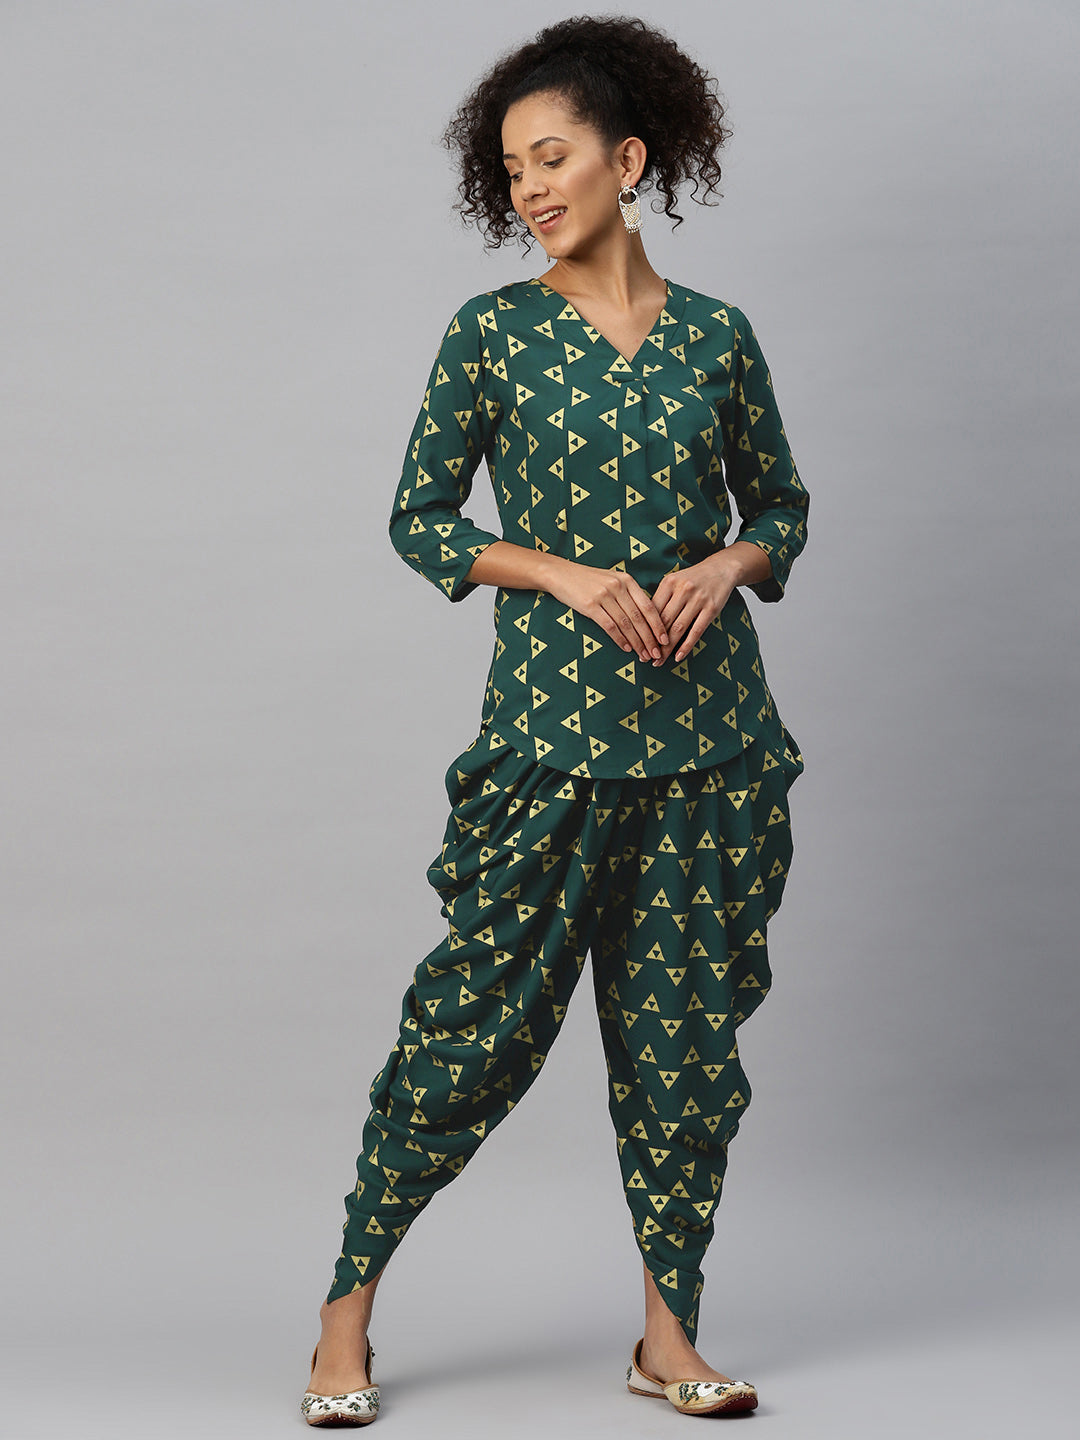 Cottinfab Women V-Neck Geometric Printed Top with Dhoti Pants